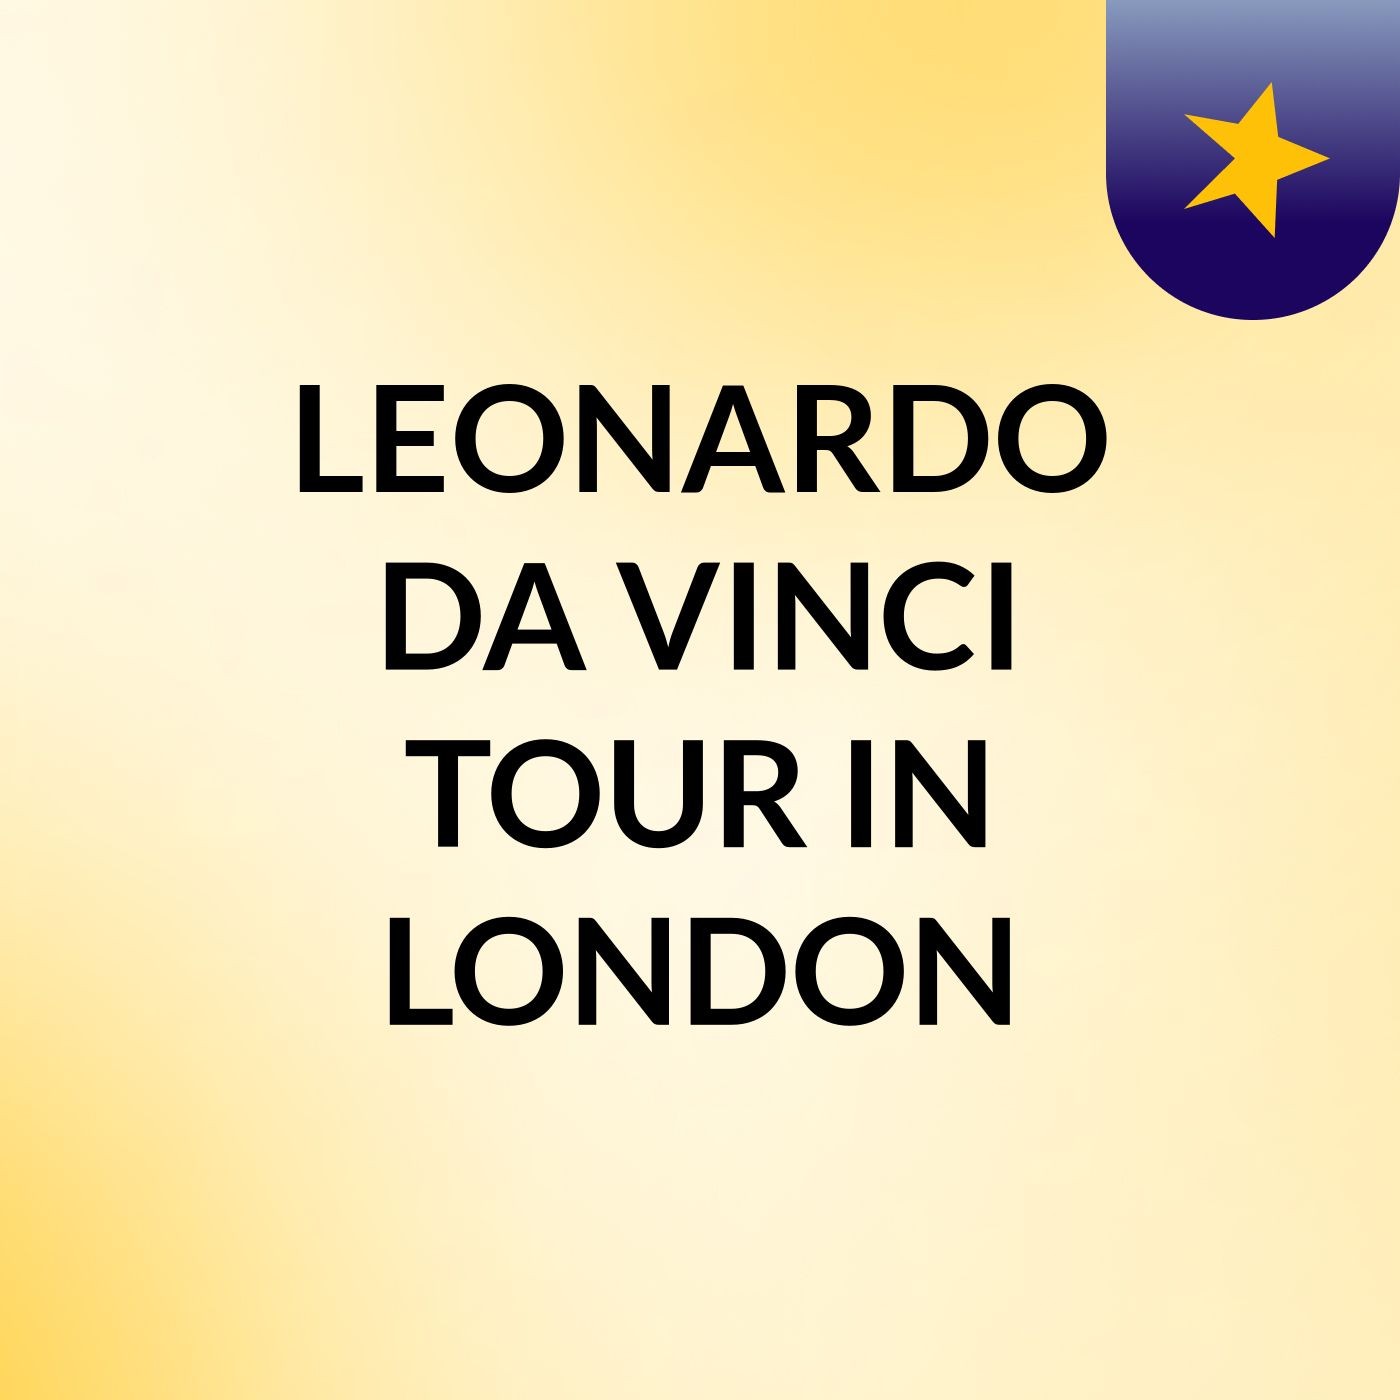 LEONARDO DA VINCI TOUR IN LONDON